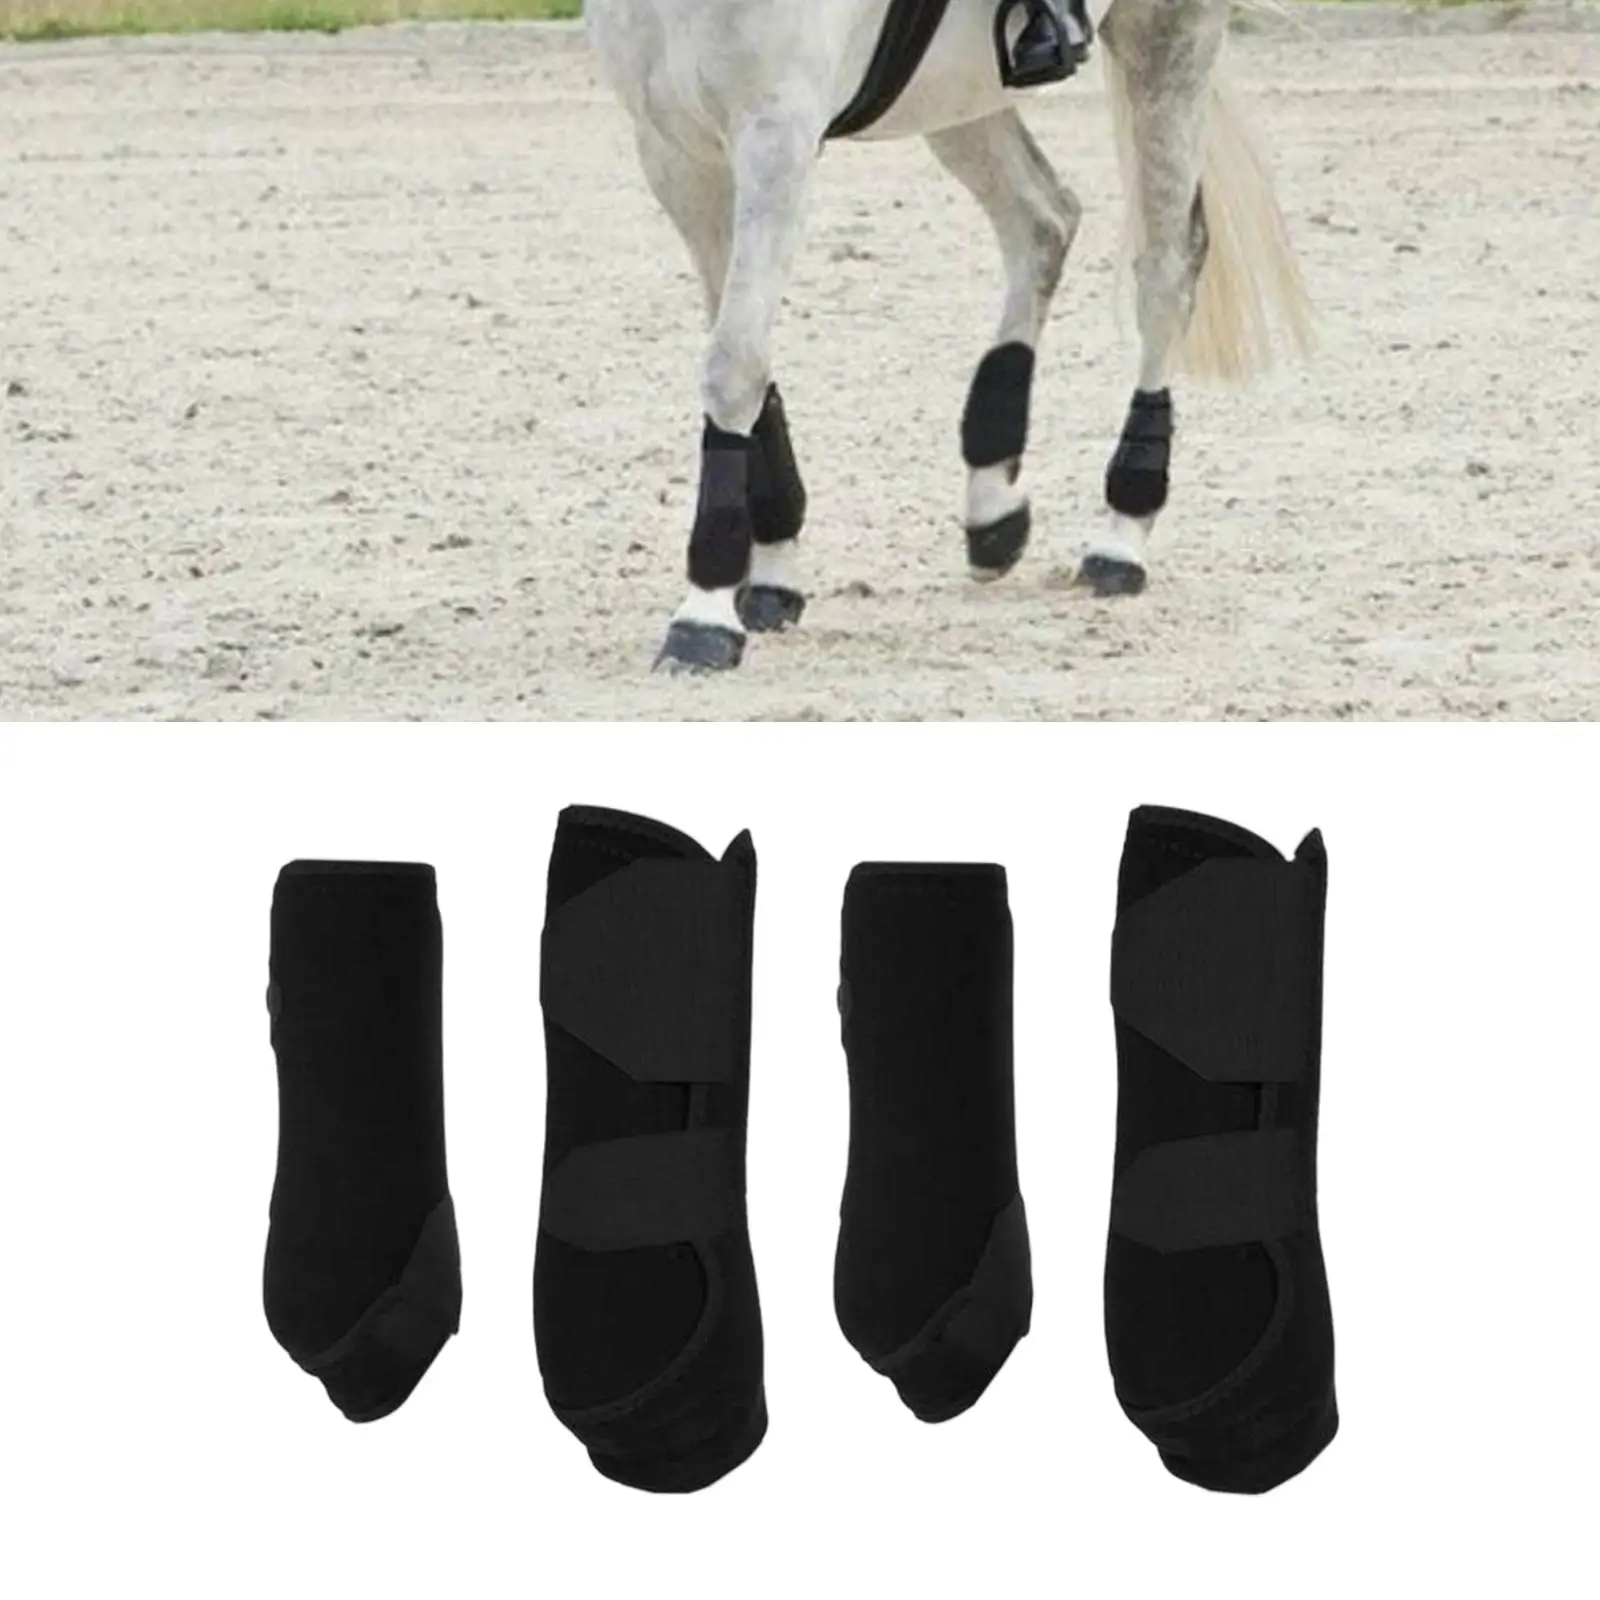 4x Horse Boots, Leg Wraps, Shock Absorbing Protector, Tendon Protection Guard